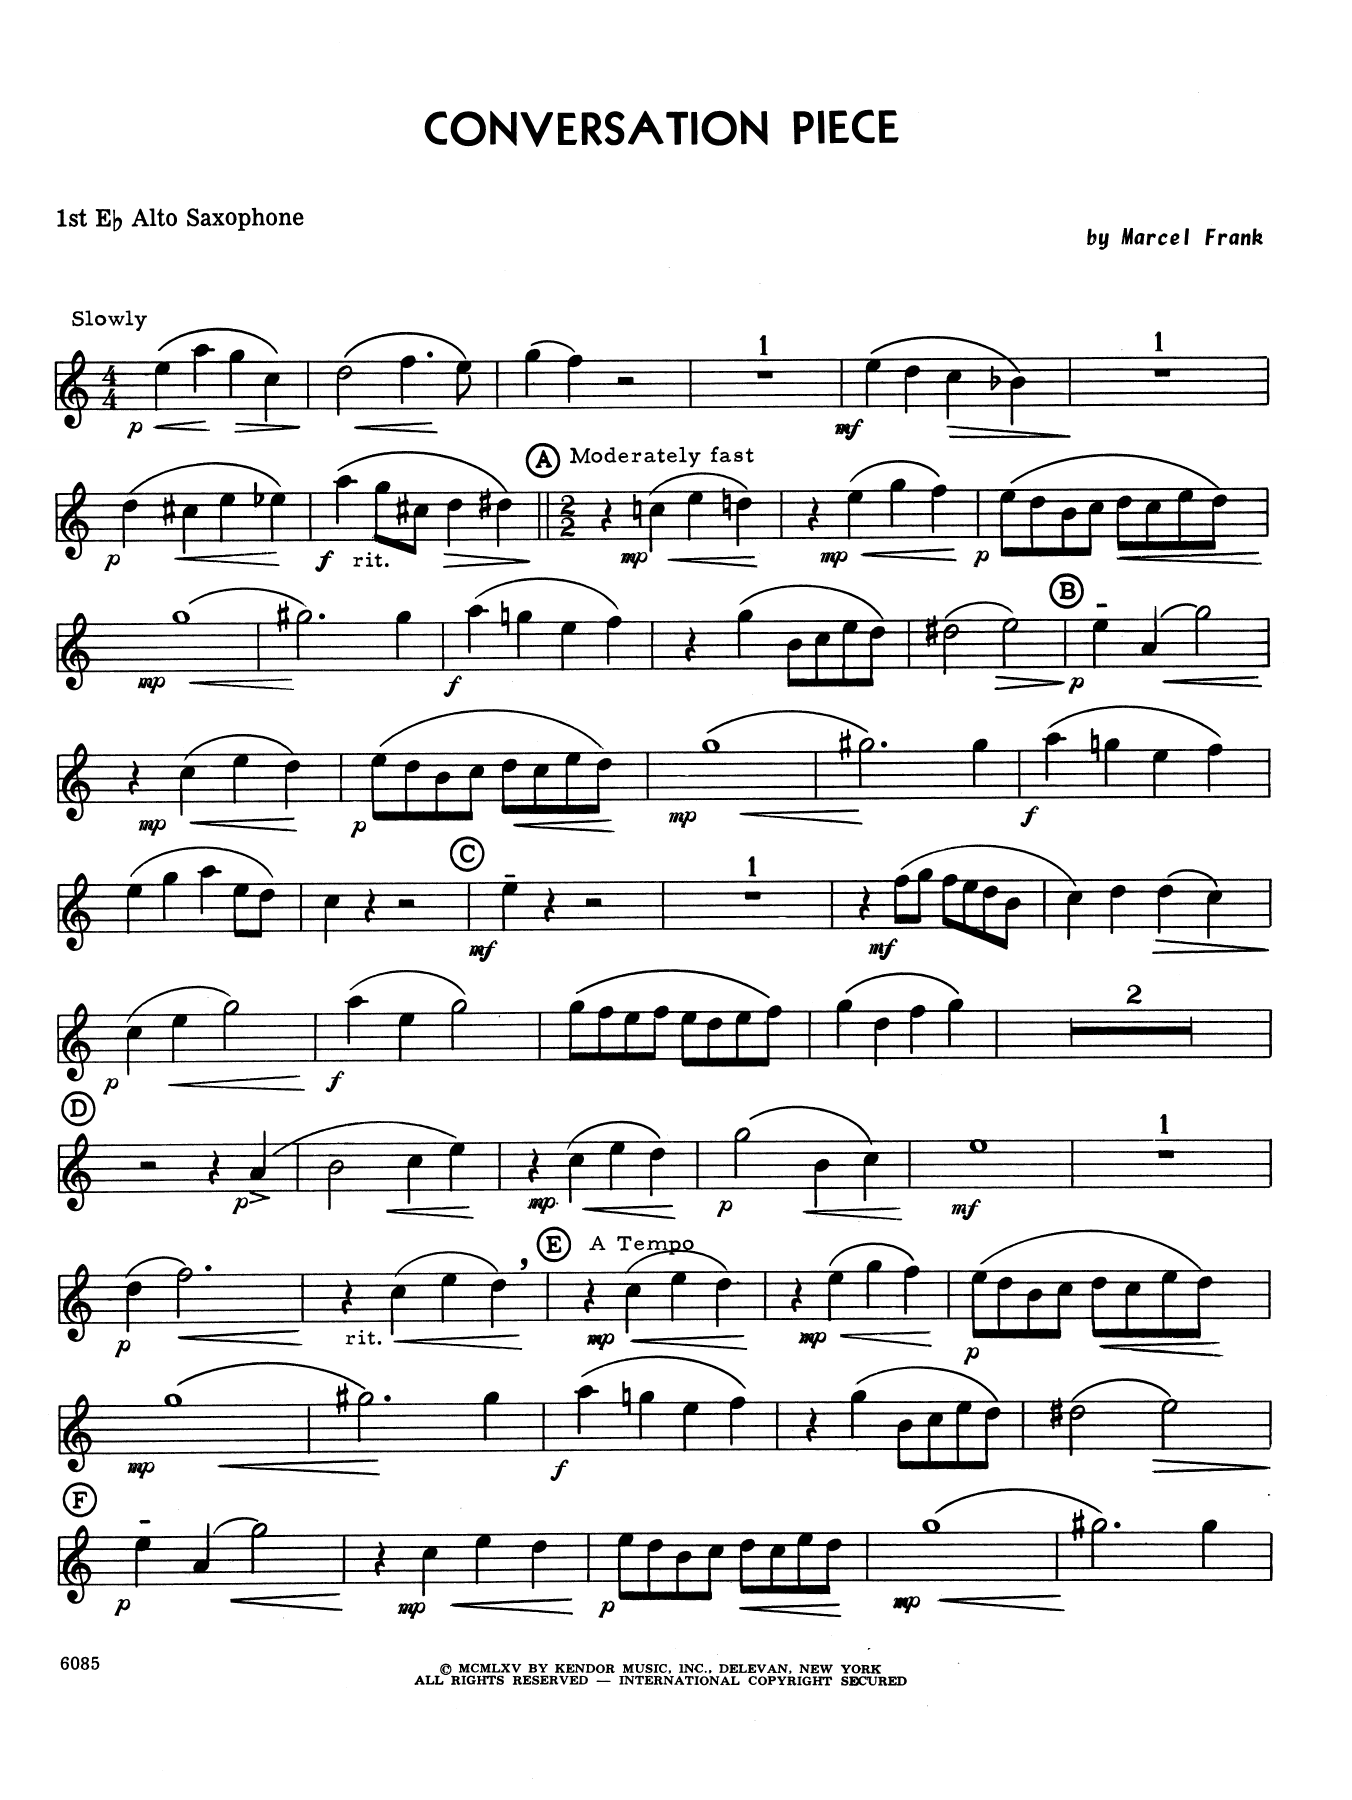 Download Marcel Frank Conversation Piece - 1st Eb Alto Saxoph Sheet Music